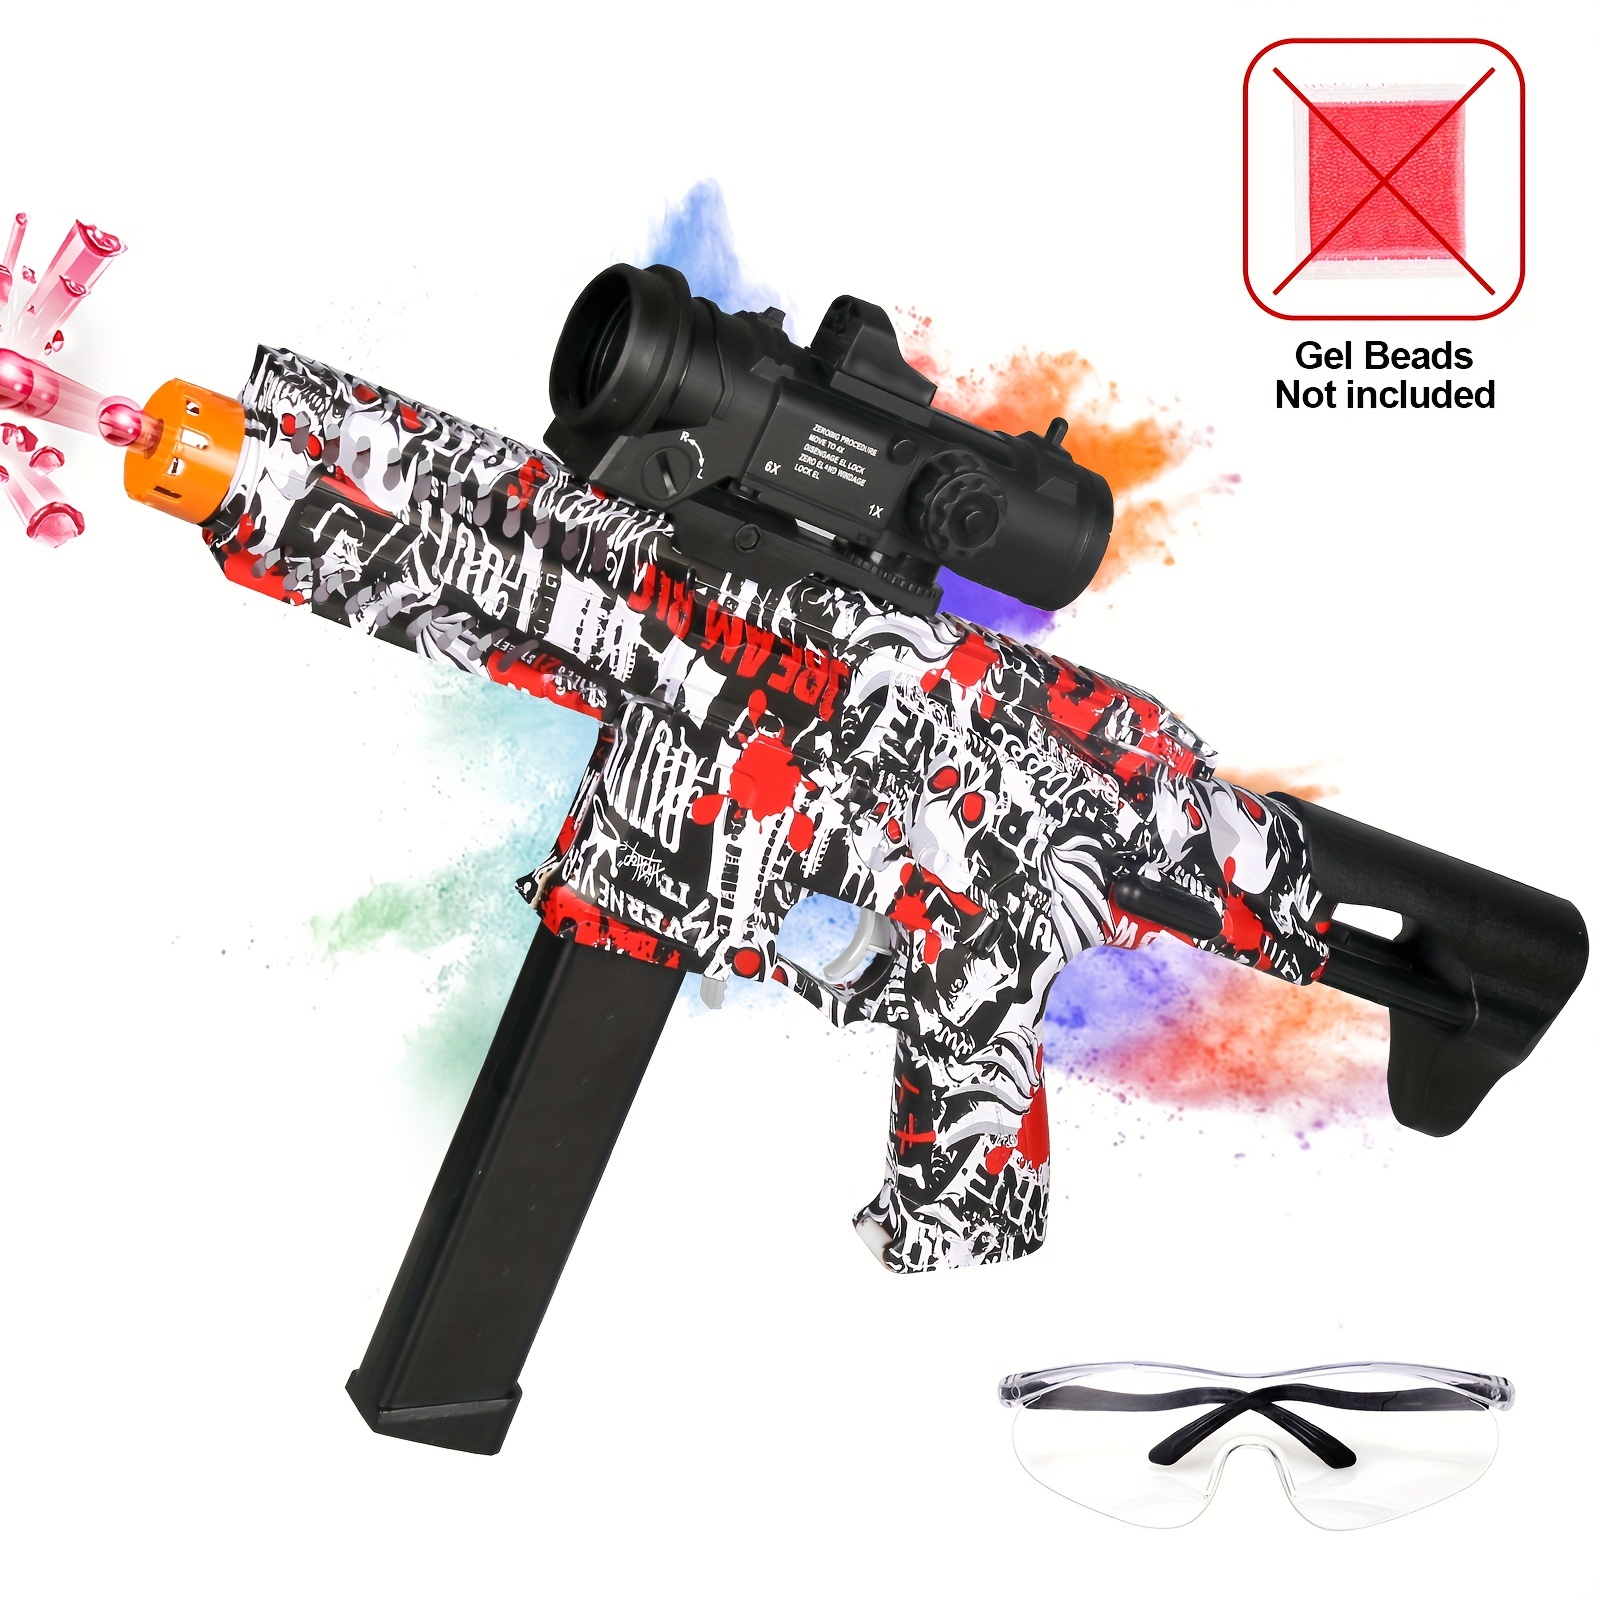 Electric Gel Blaster - M416 Splatter Ball Gun Fully Automatic (Red